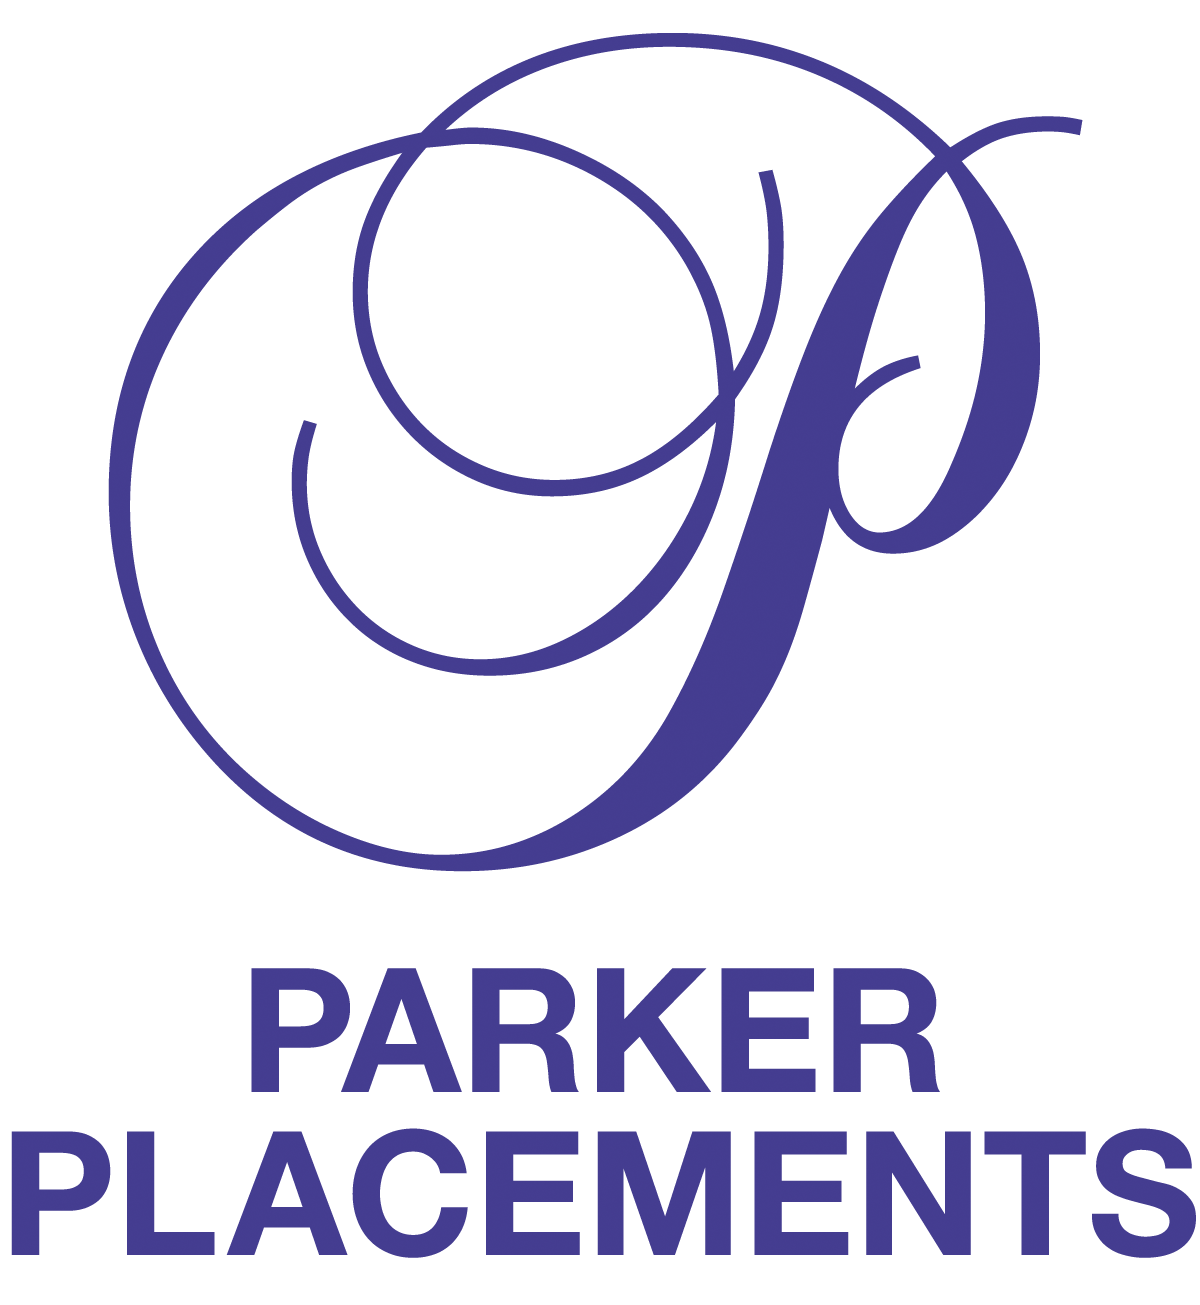 Finding jobs | Open Jobs | Parker Placements